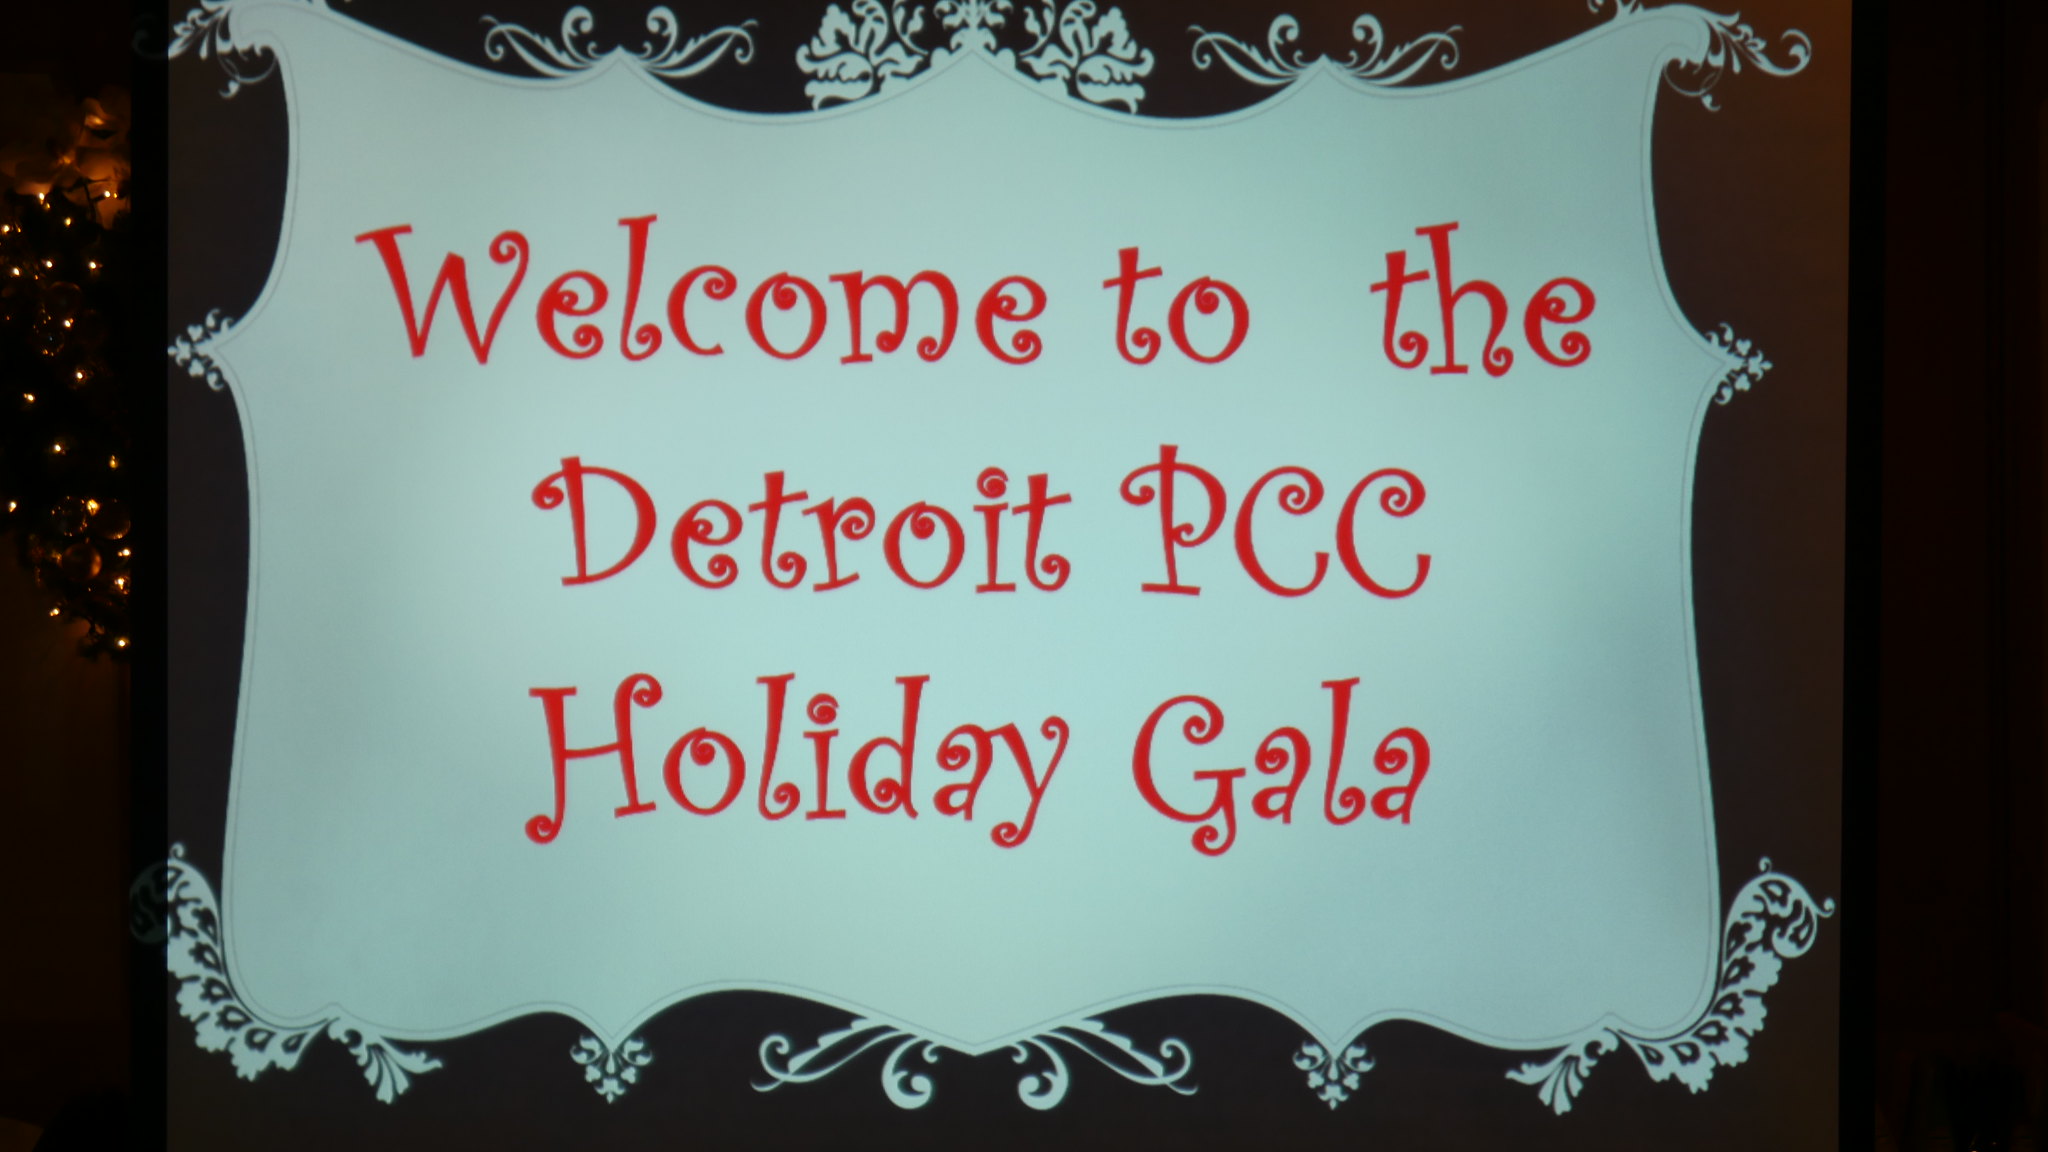 P2180013 - PCC Holiday Gala